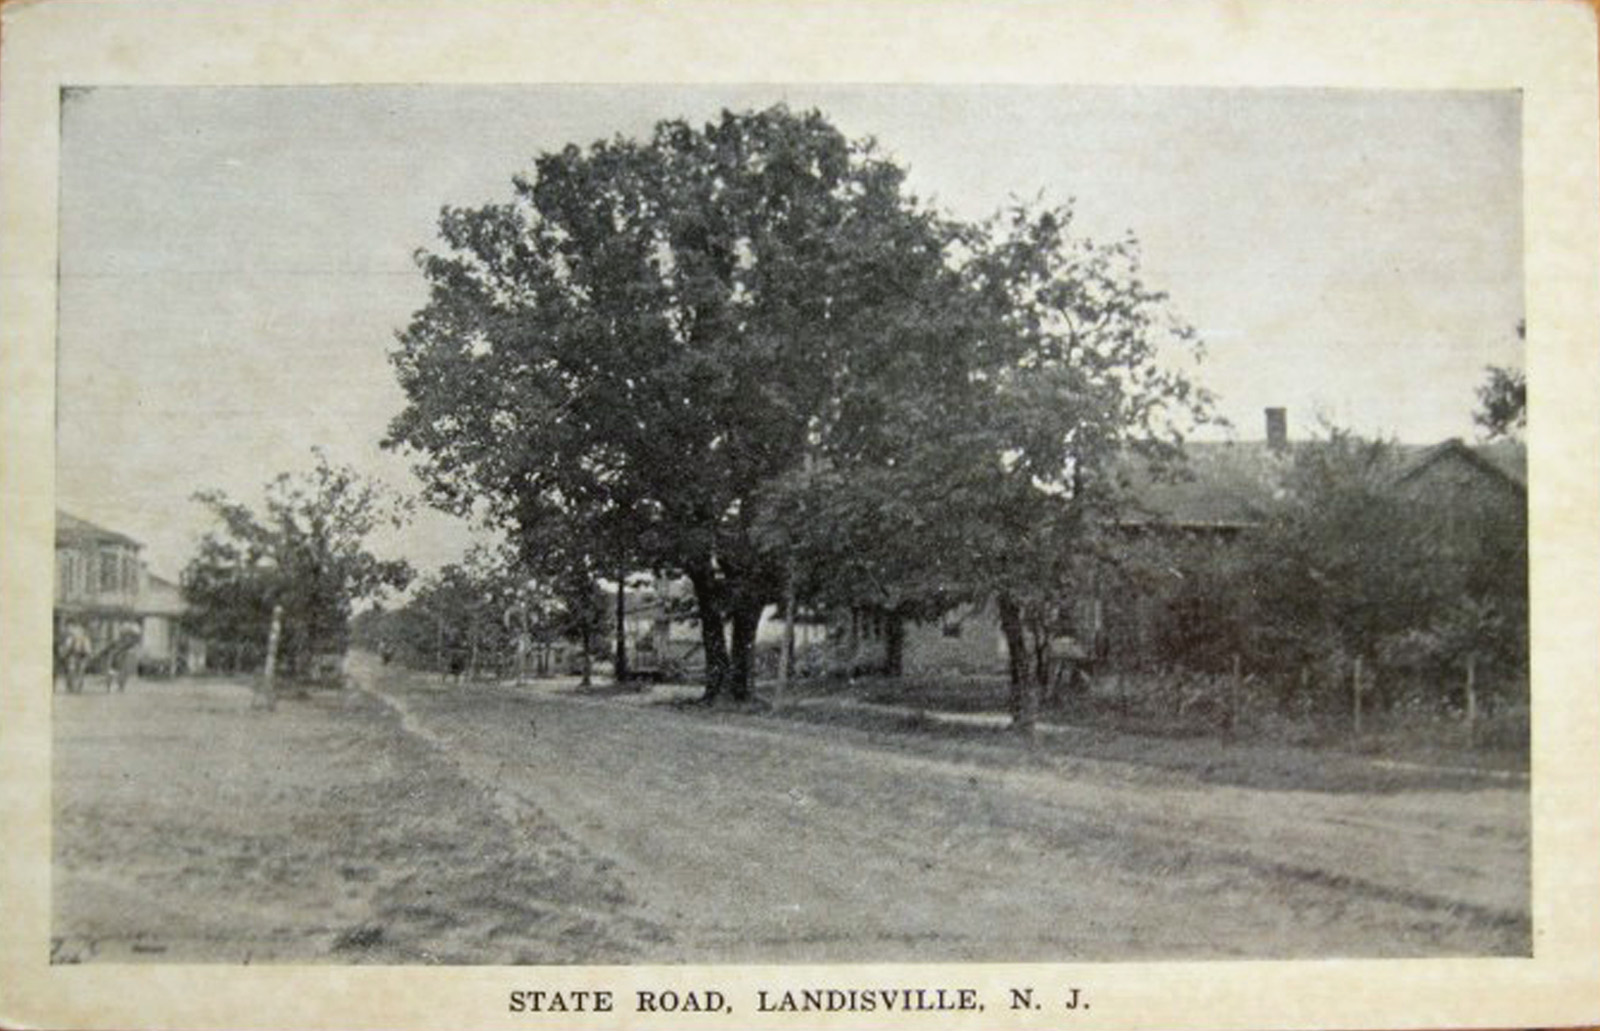 Landisville - State Road through town - 1915